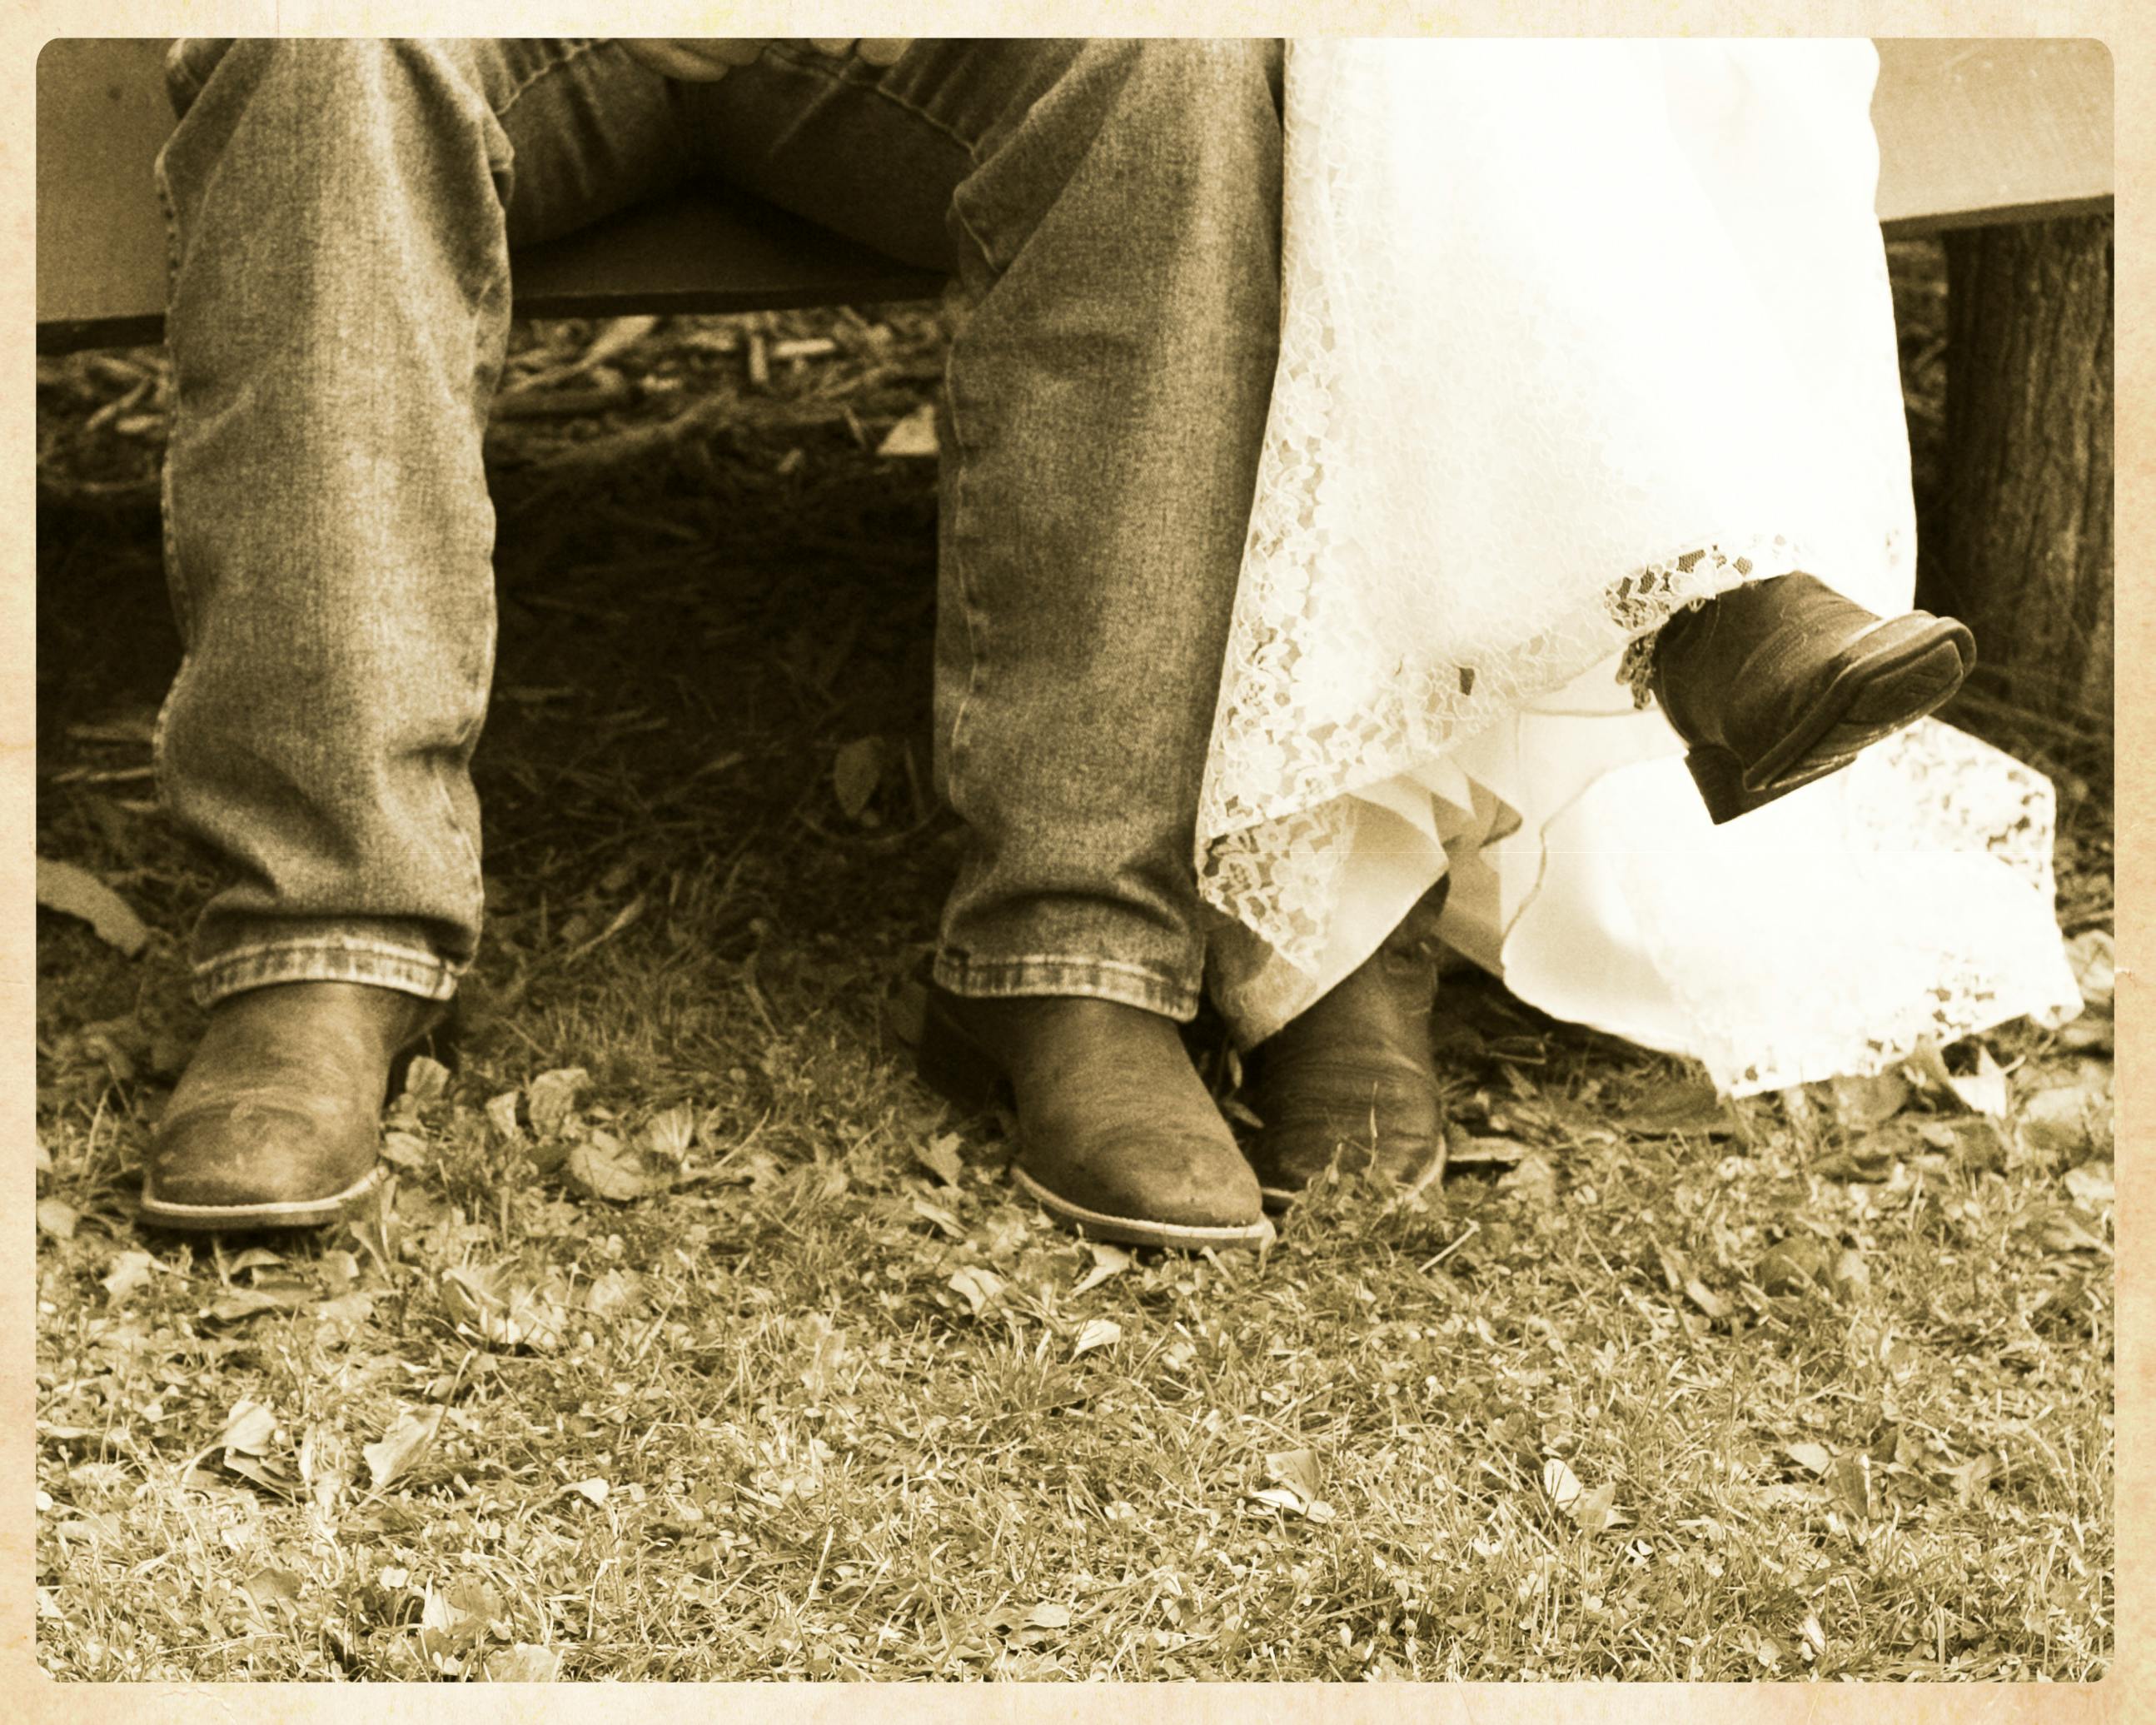 Free stock photo of Bride and Groom, country wedding, wedding